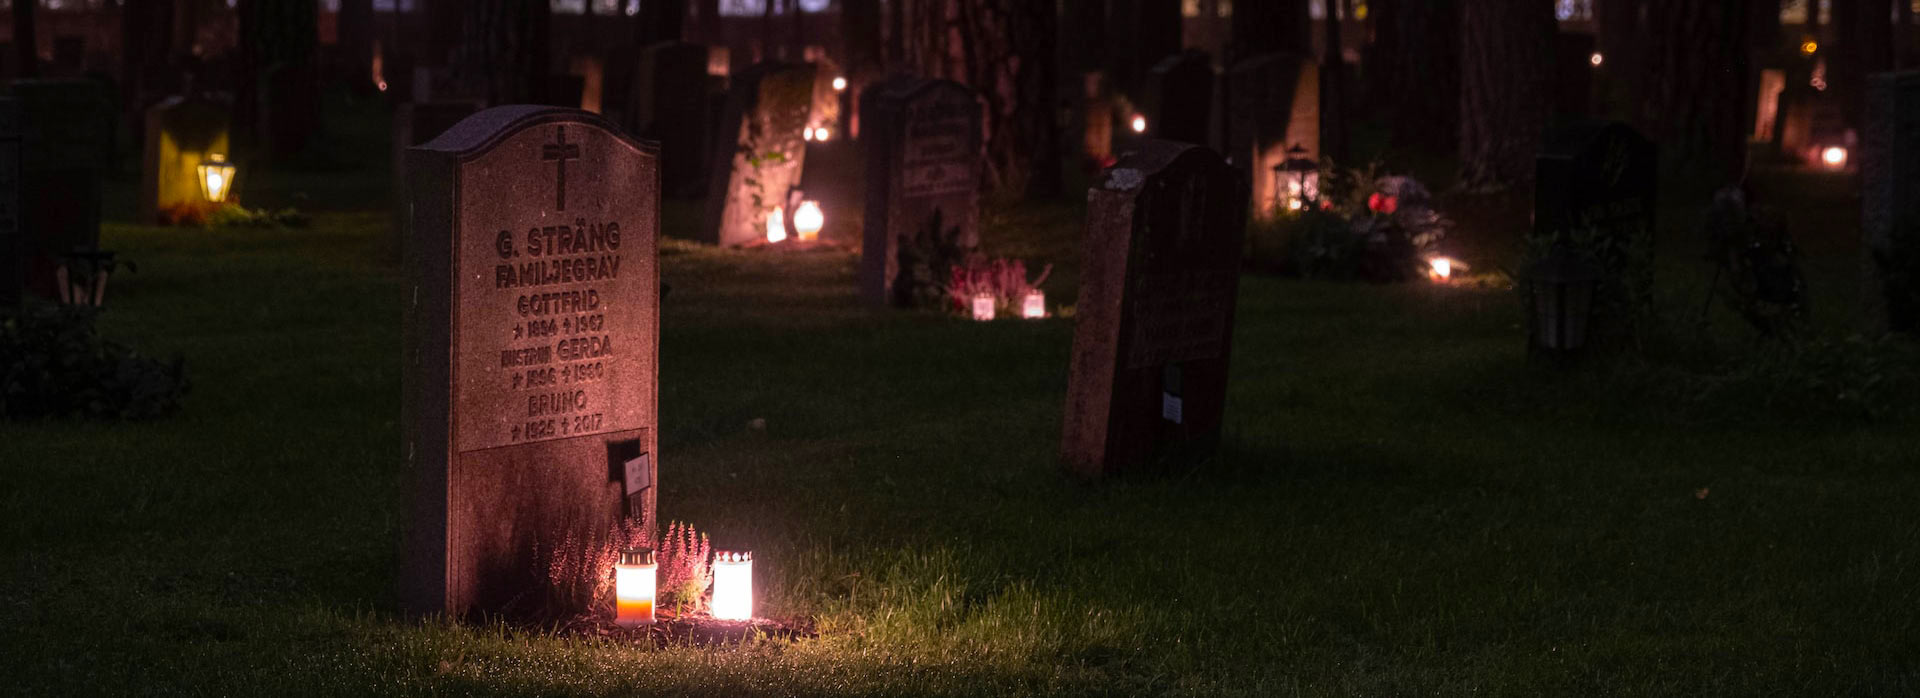 Un cementerio de noche iluminado con velas